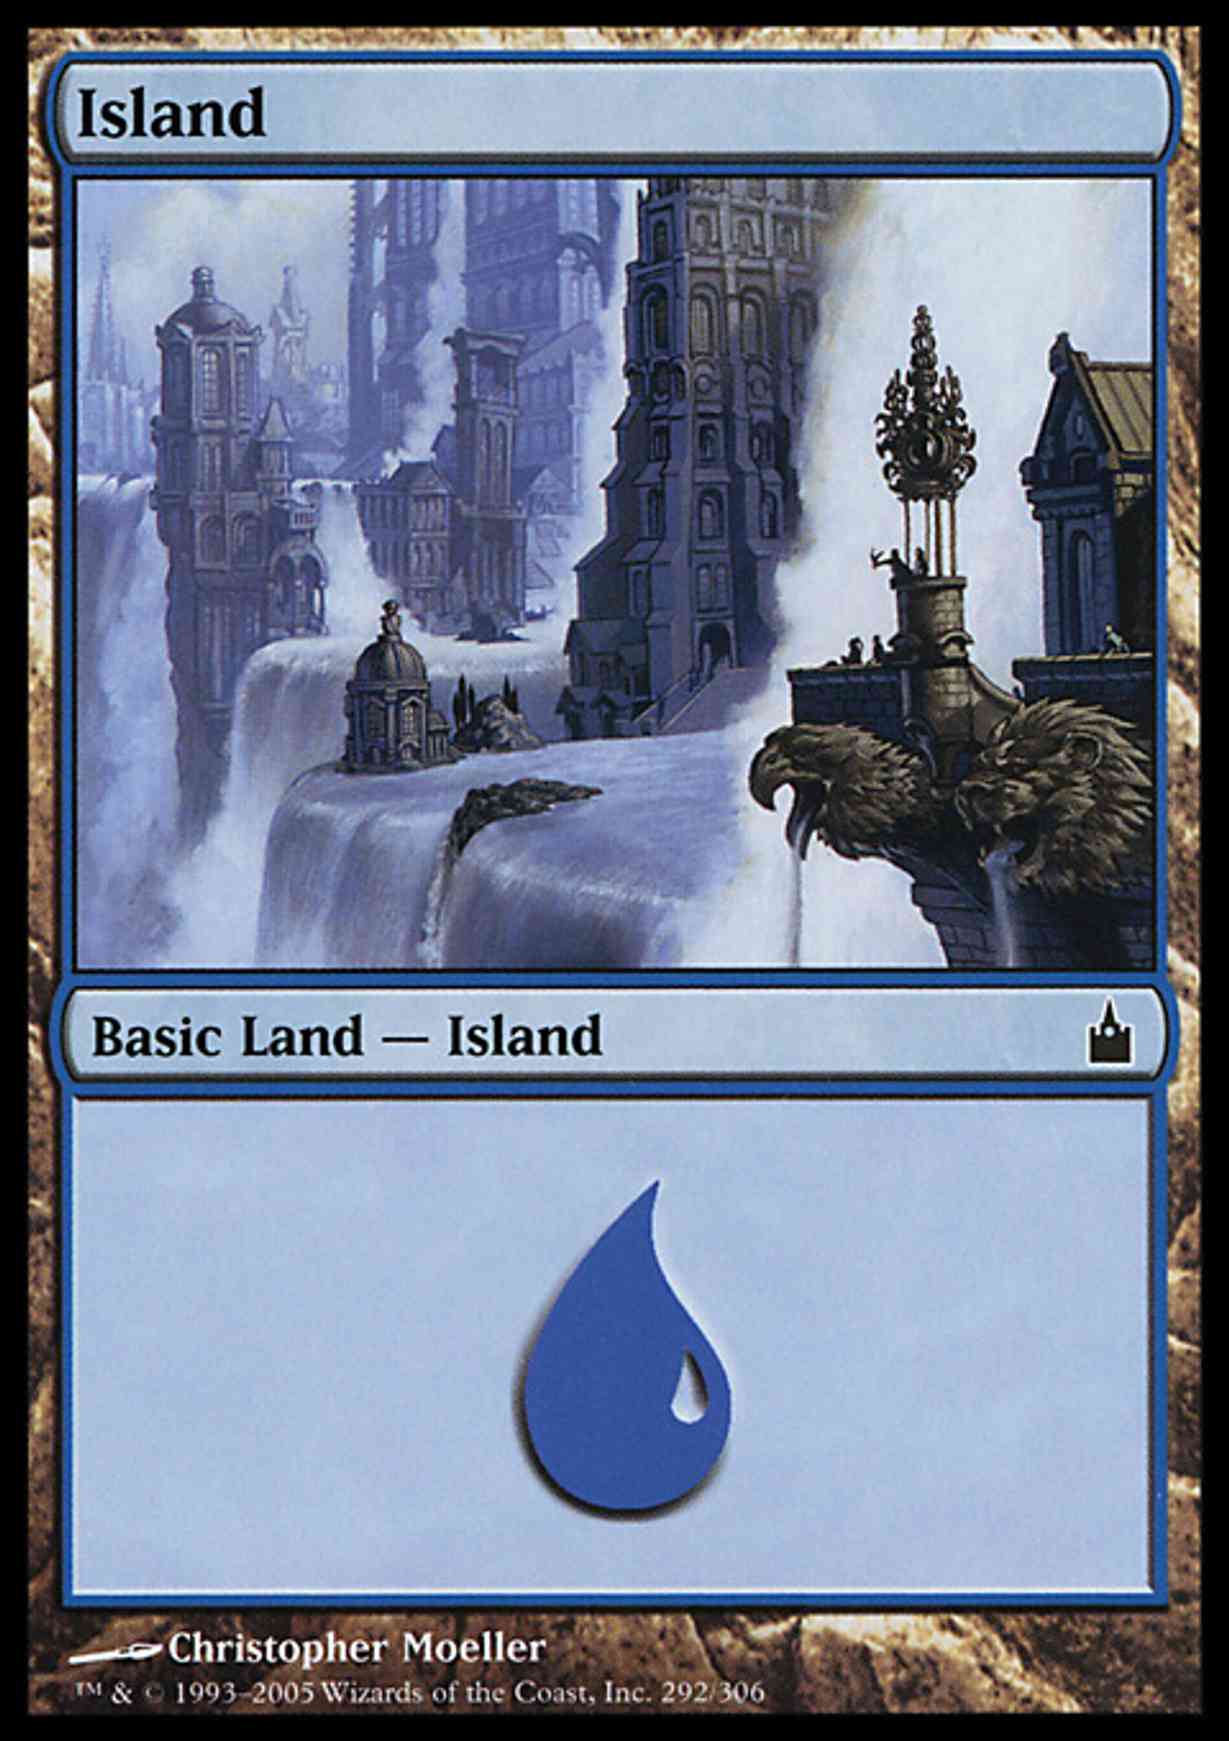 Island (292) magic card front